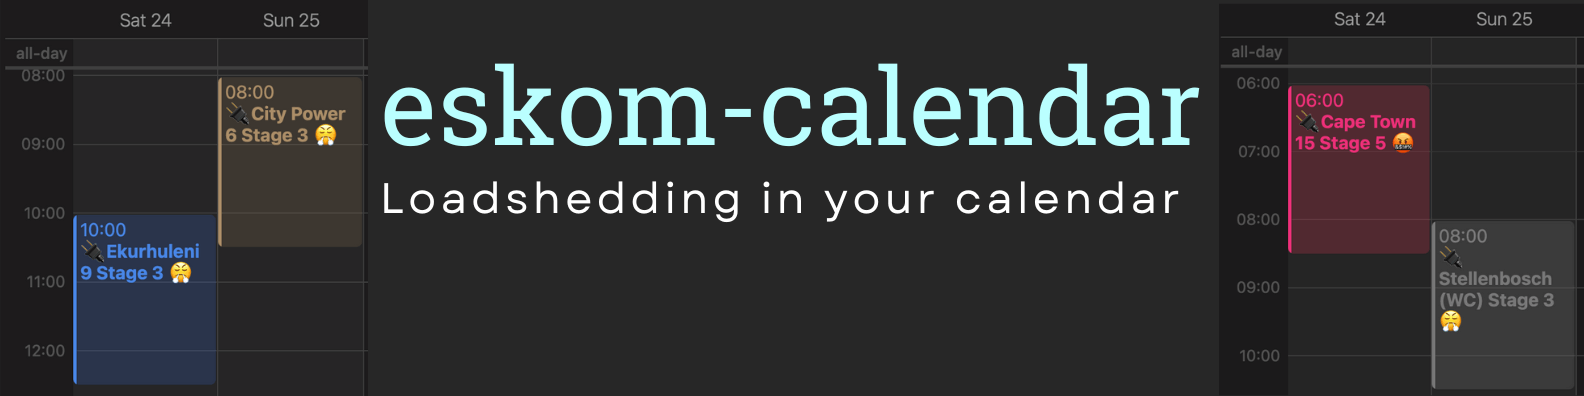 eskom-calendar: loadshedding in your calendar